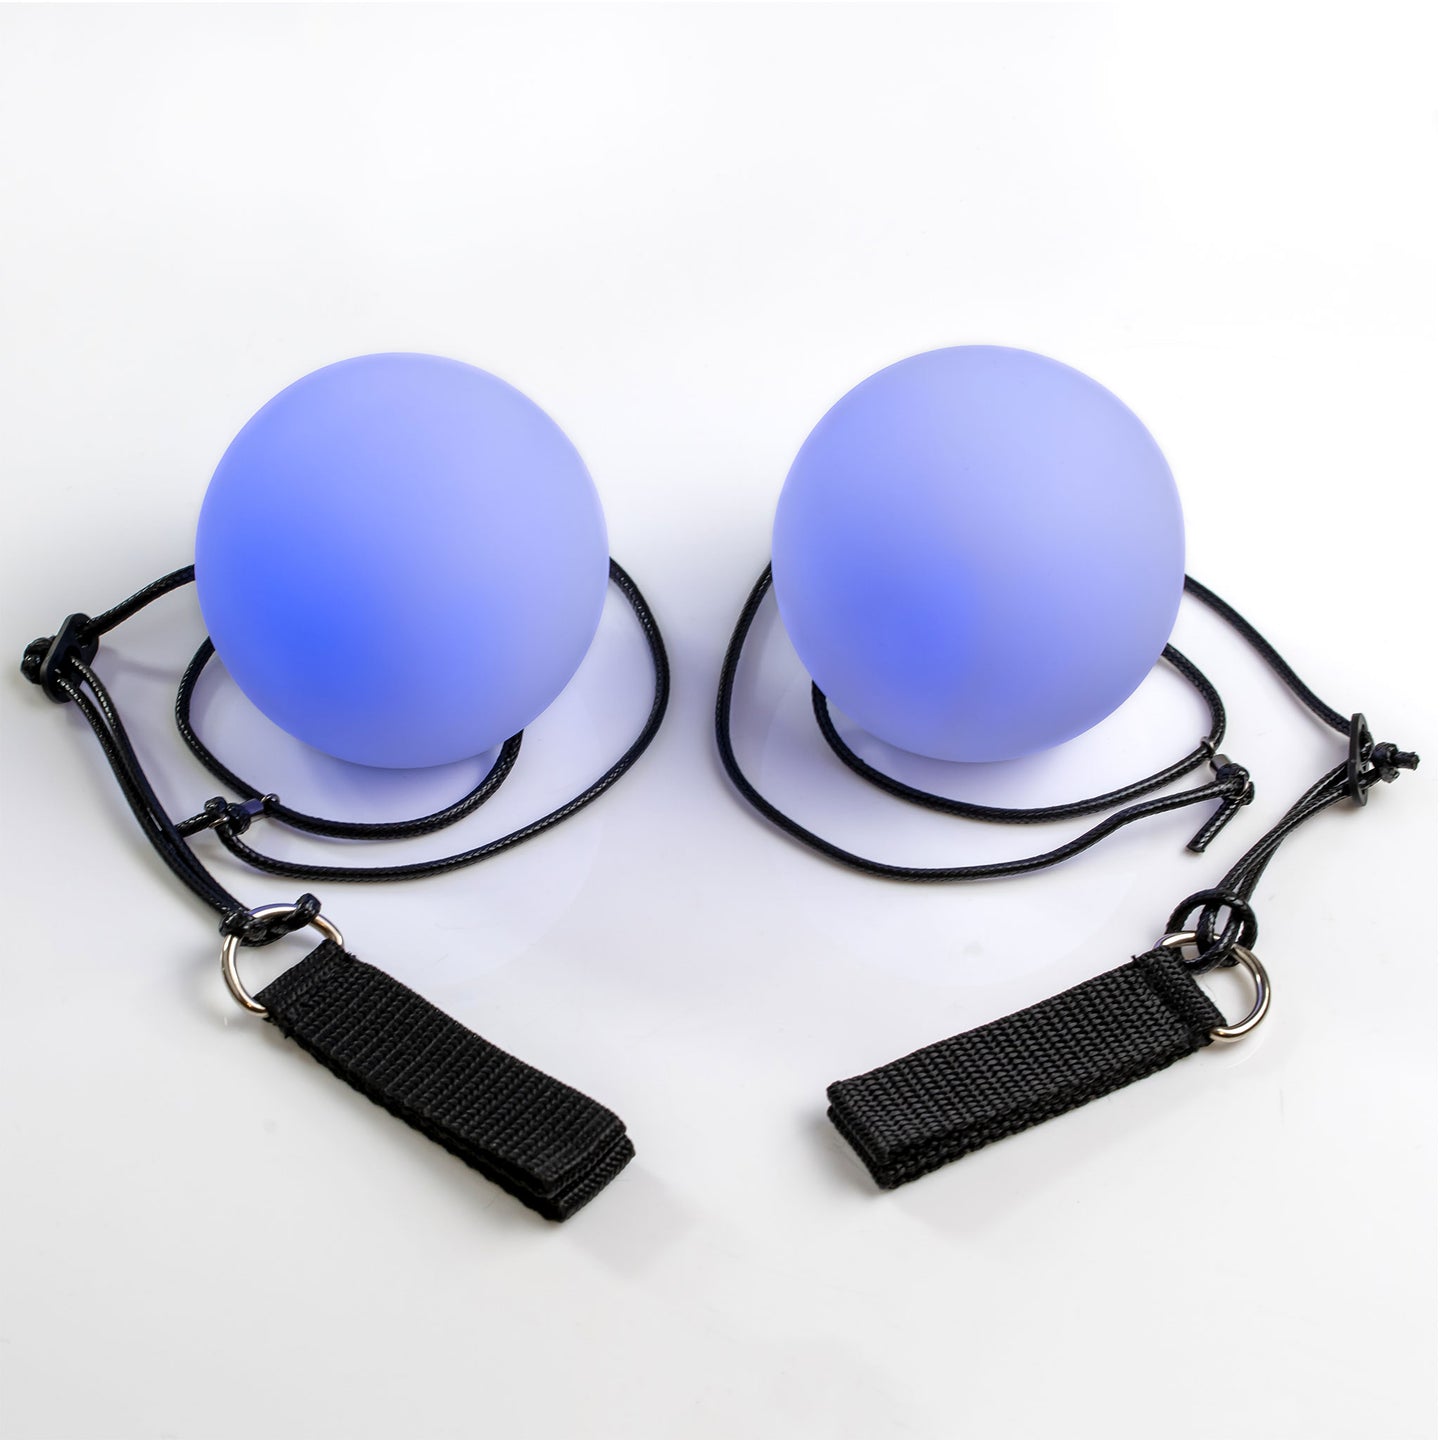 LED Poly Poi Set - blue colour